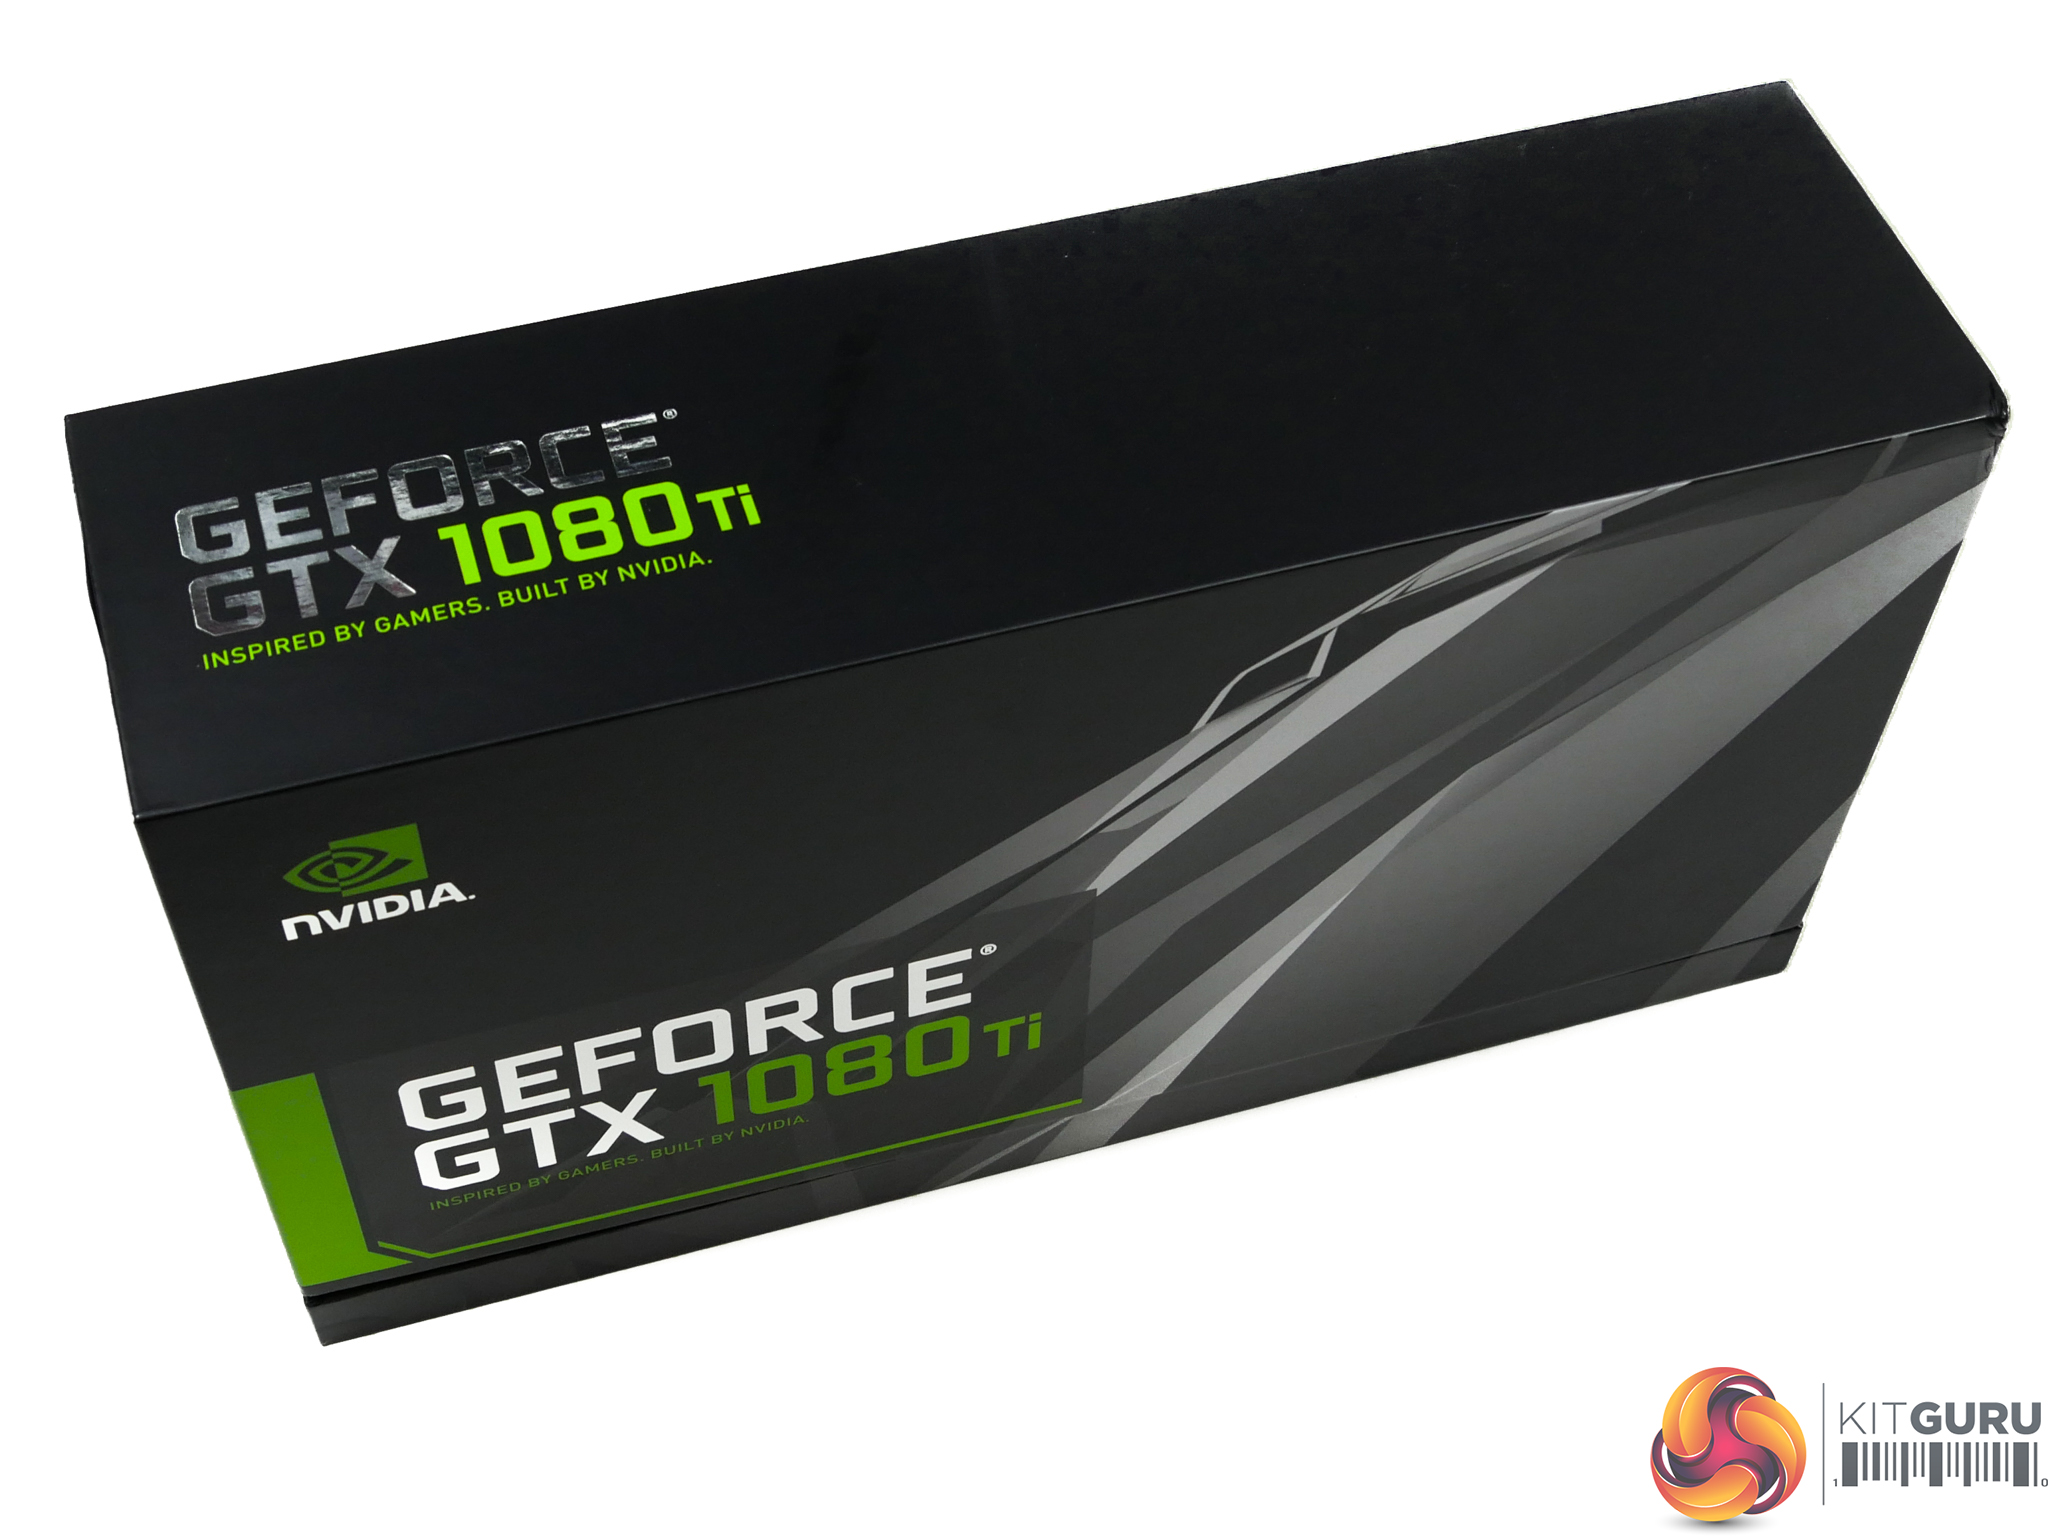 Nvidia GTX 1080 Ti Founders Edition 